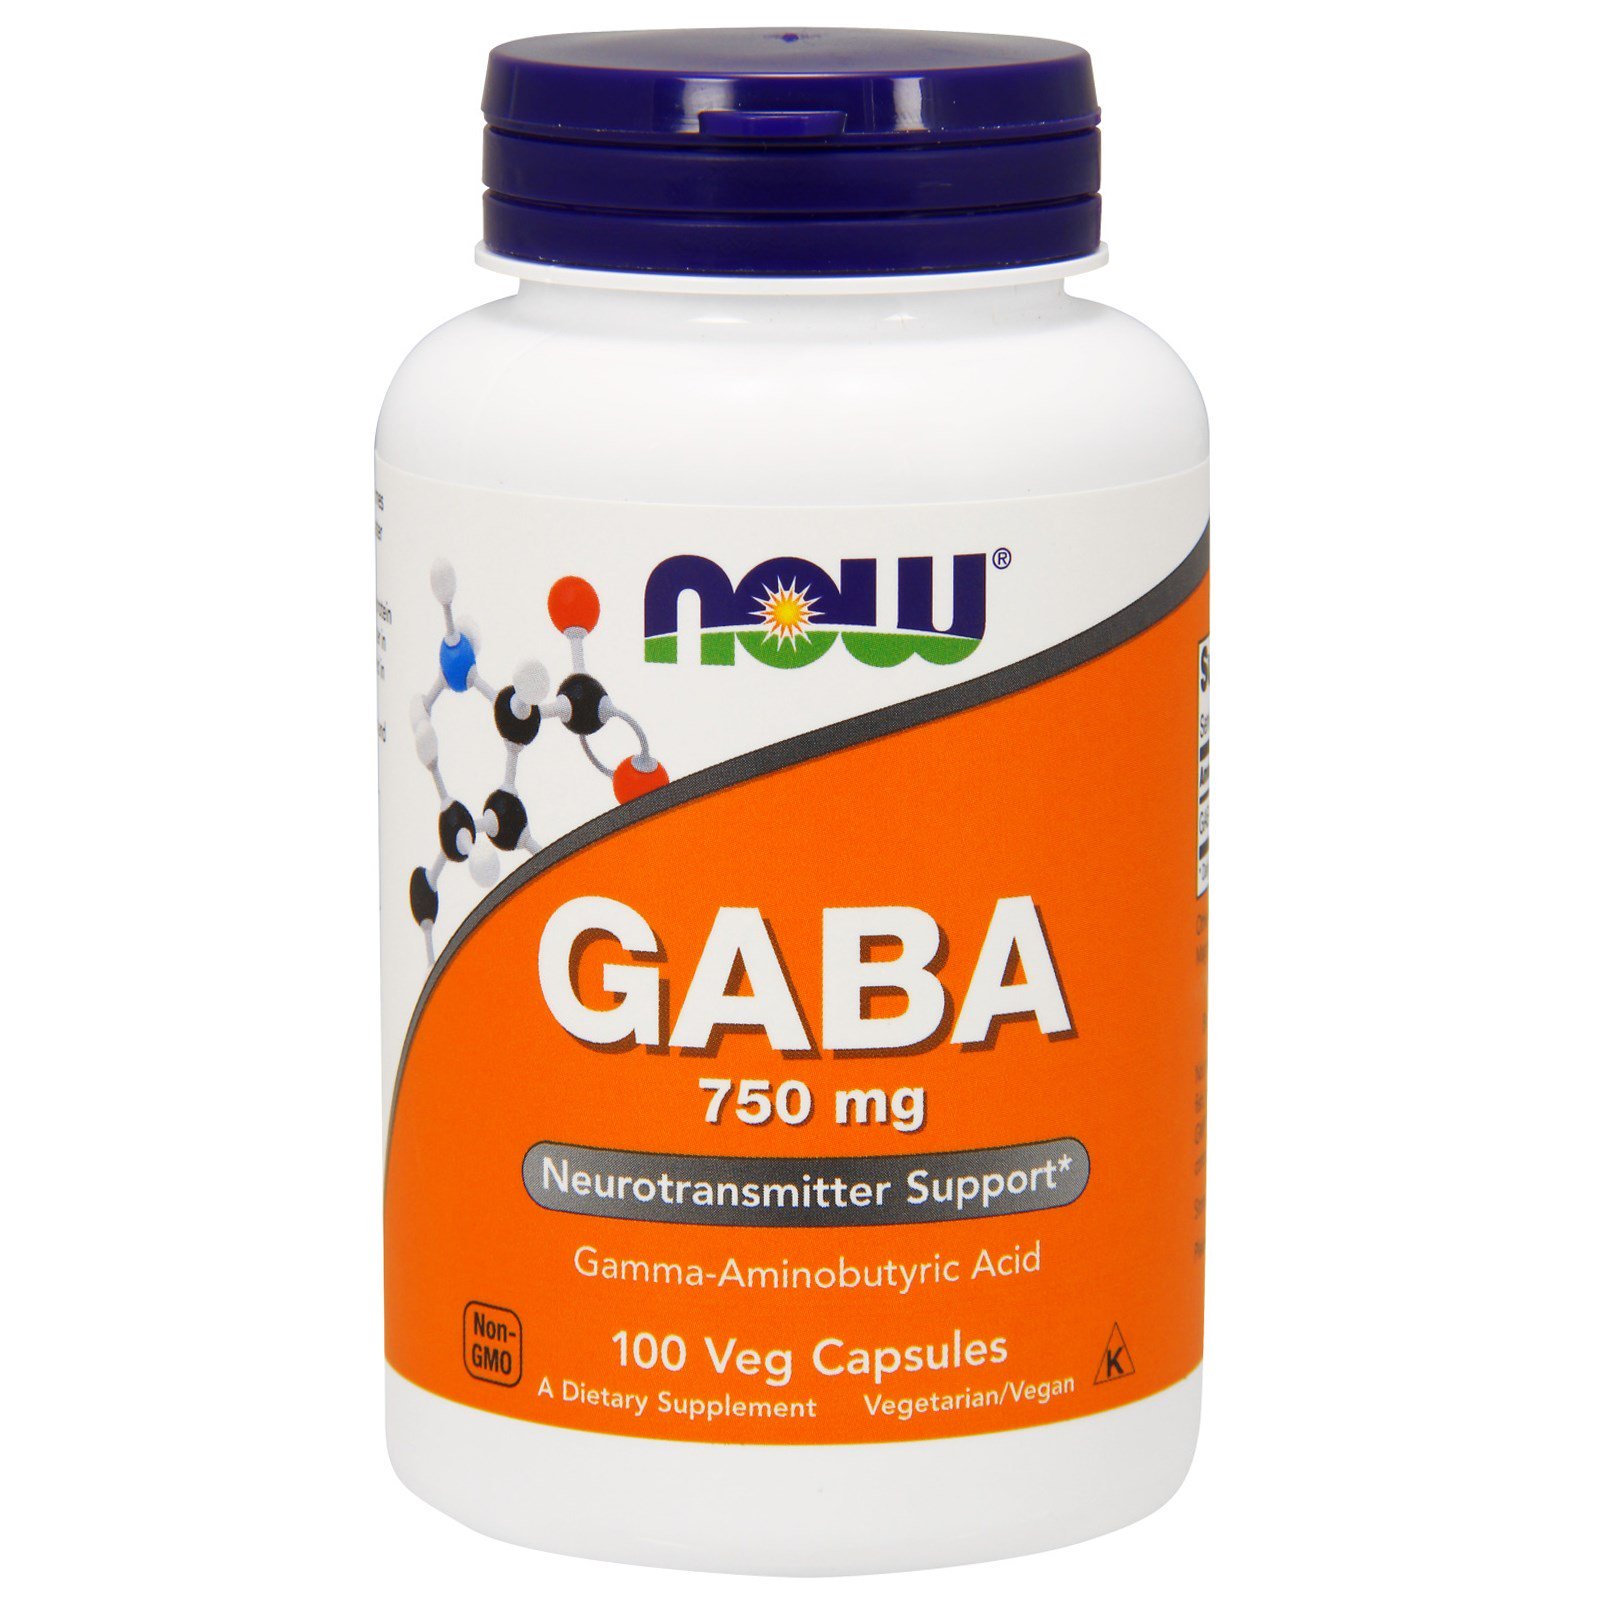 NOW GABA, ГАБА Гамма-Аминомасляная Кислота (ГАМК) 750 мг - 100 капсул